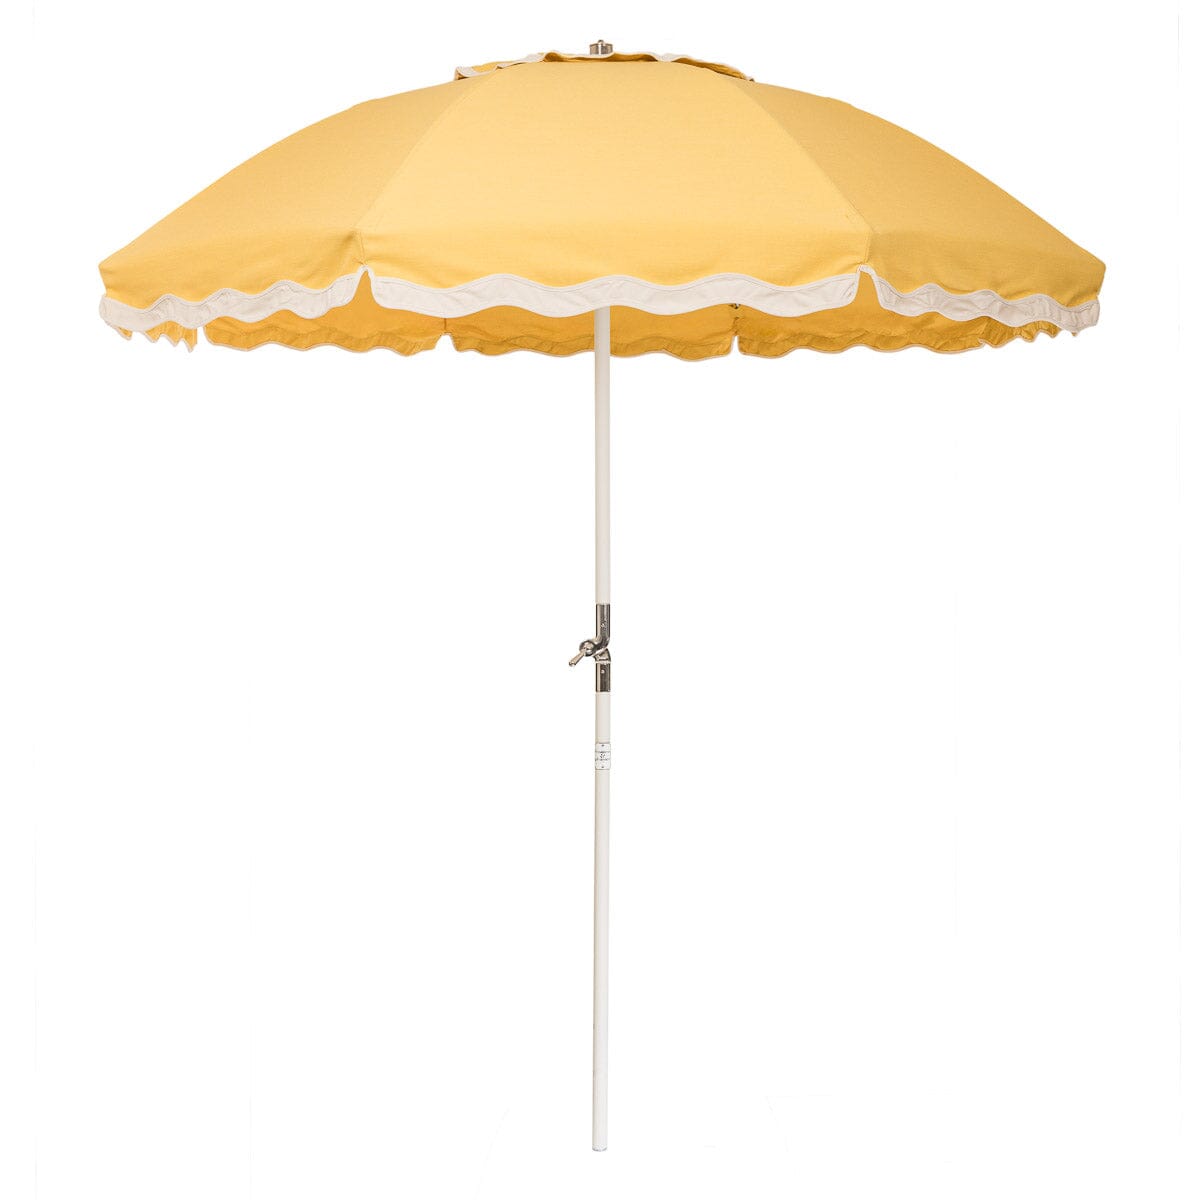 The Club Umbrella - Rivie Mimosa Beach Club Umbrella Business & Pleasure Co Aus 